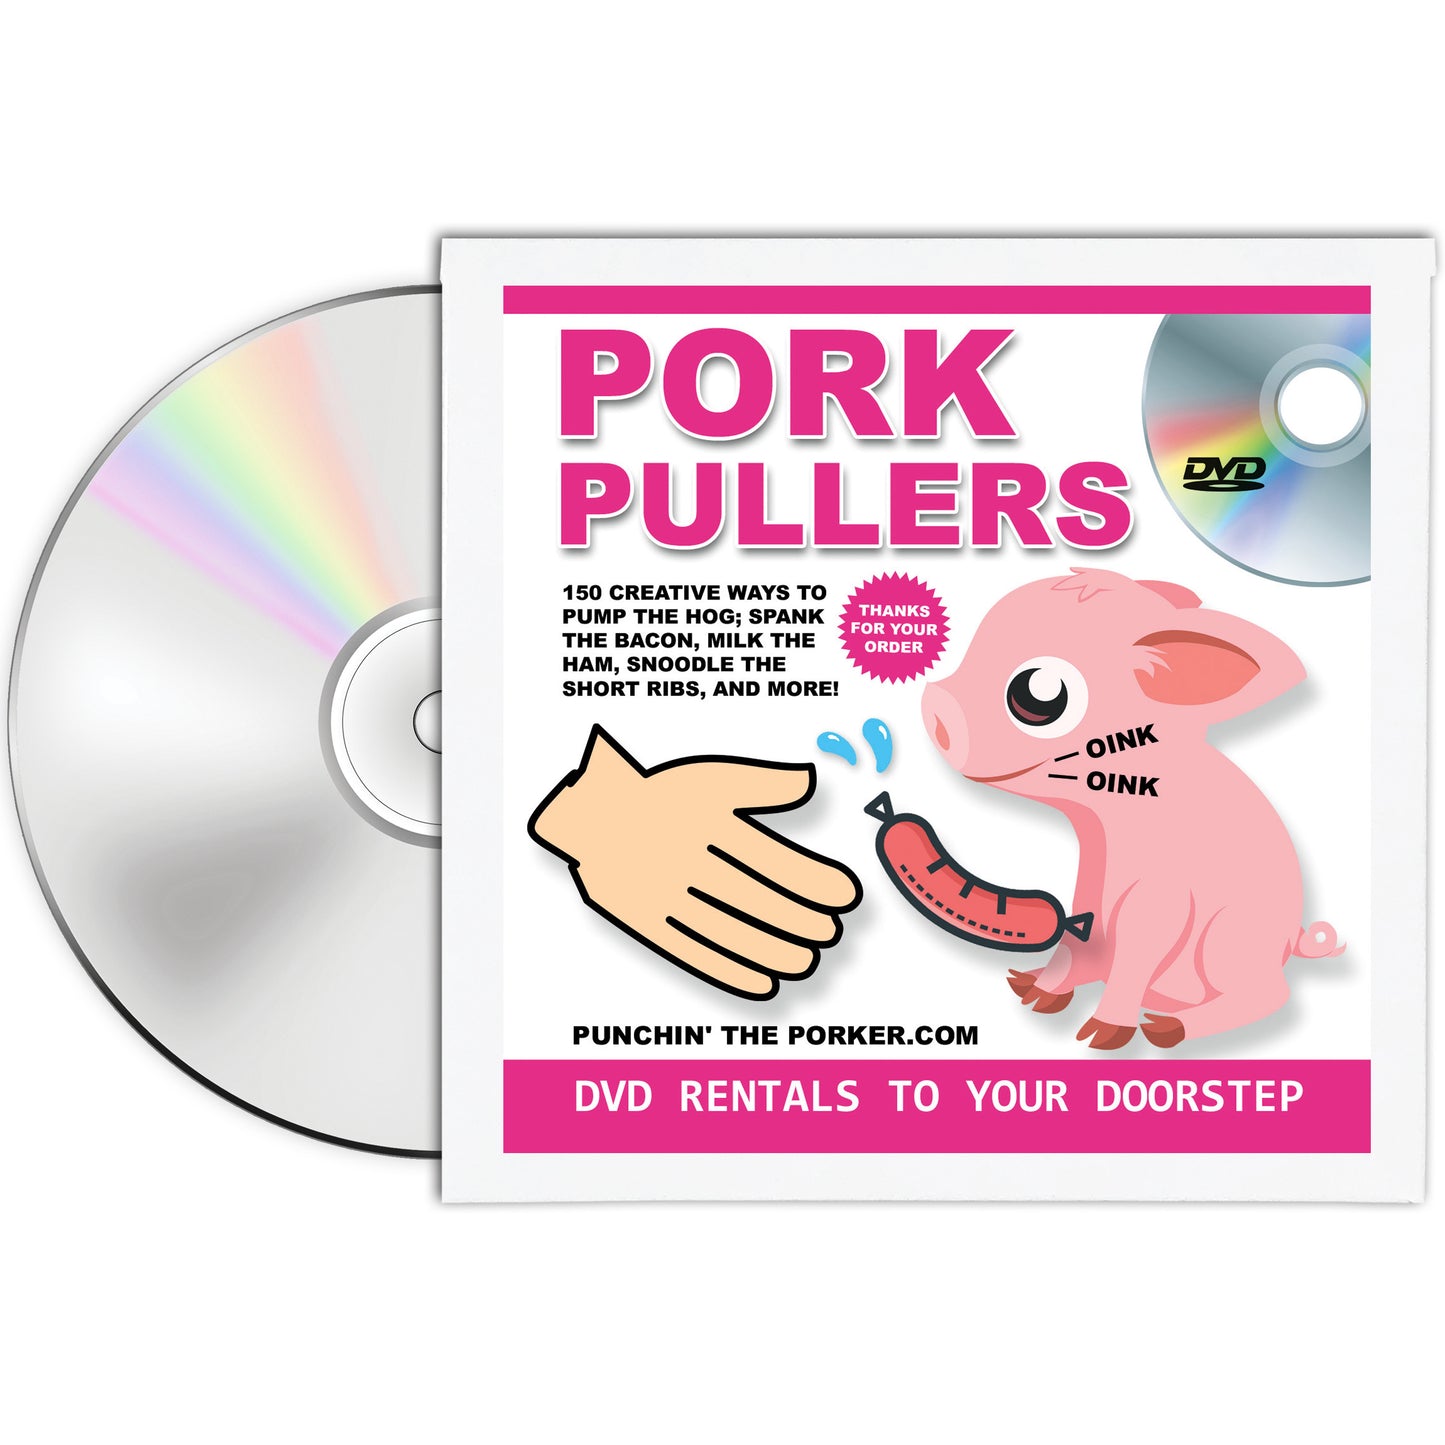 Pork Pullers Fake DVD Mail Gag